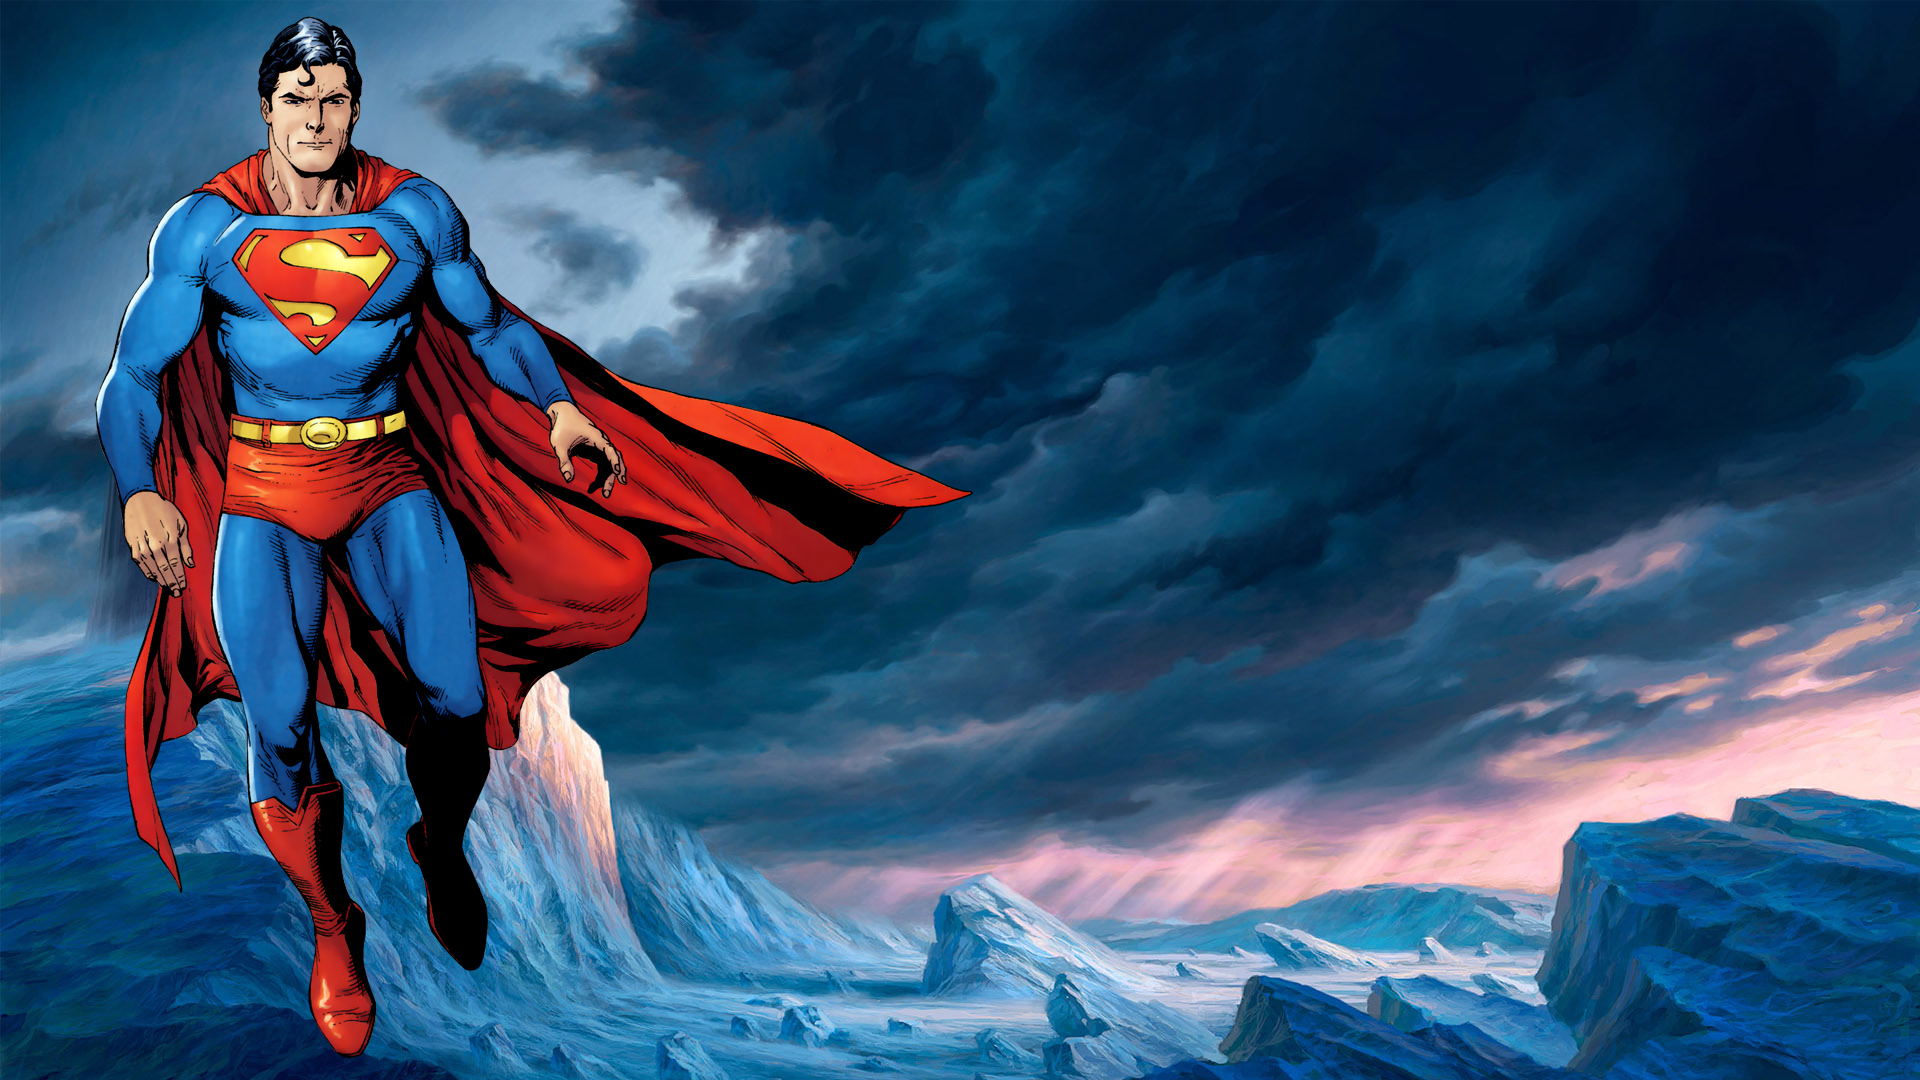 Superman Wallpaper Superhero Man Suit Coat Symbol Flying